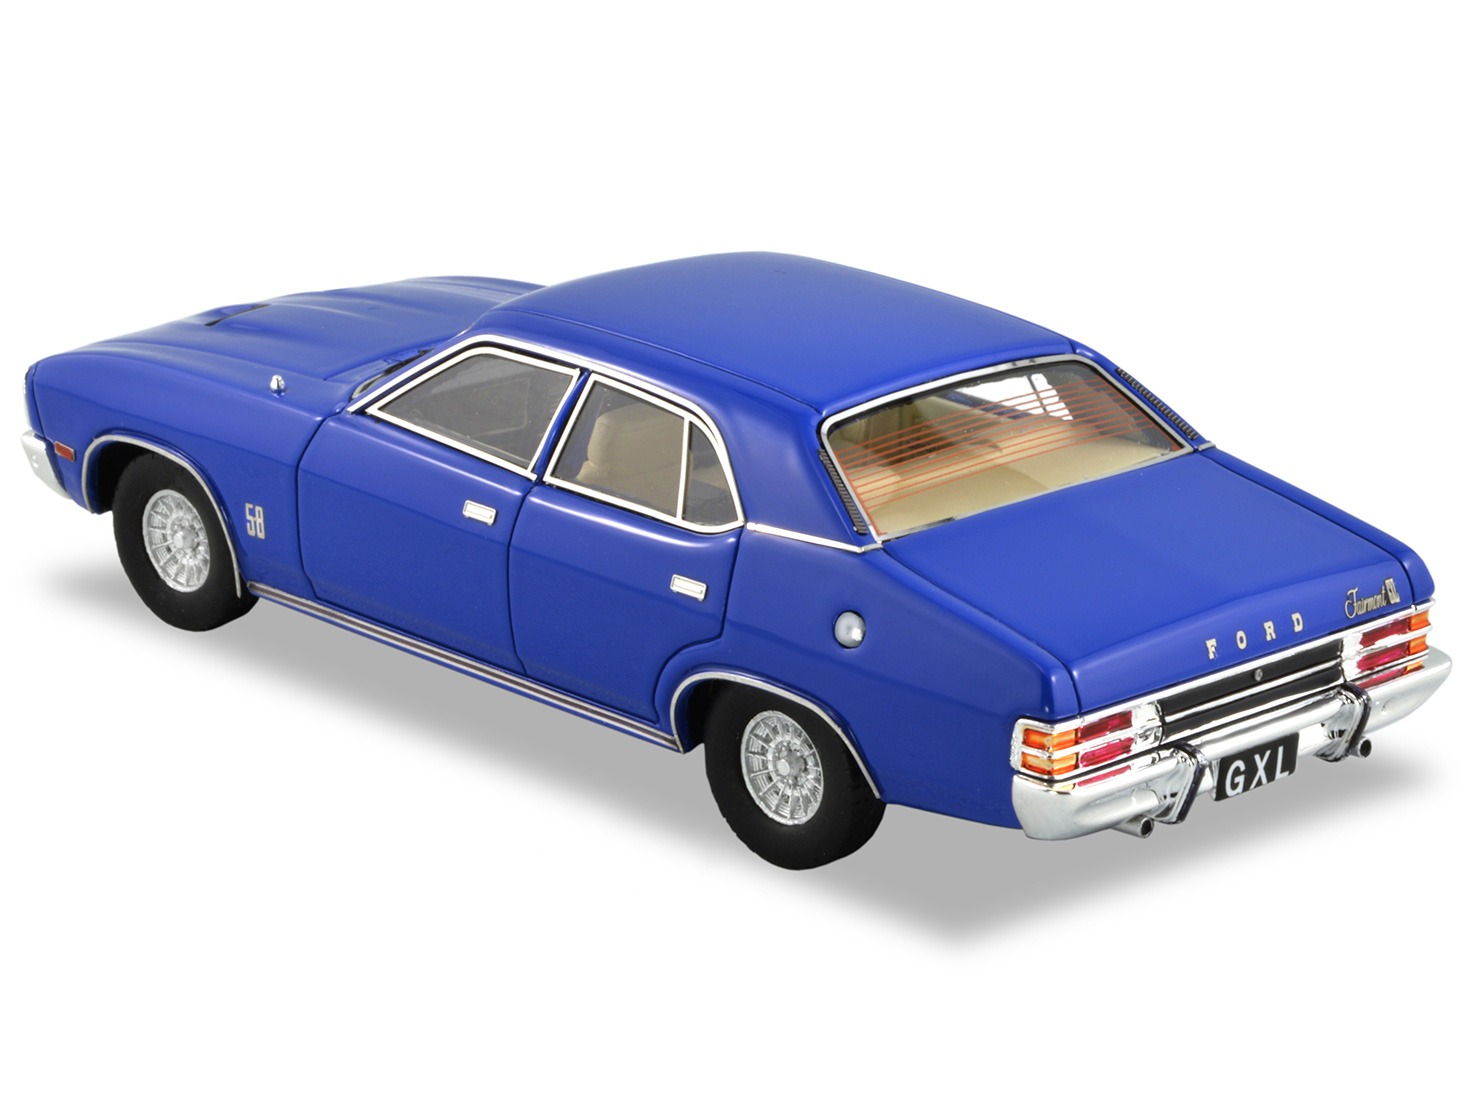 1977 Ford Fairmont GXL – Blue